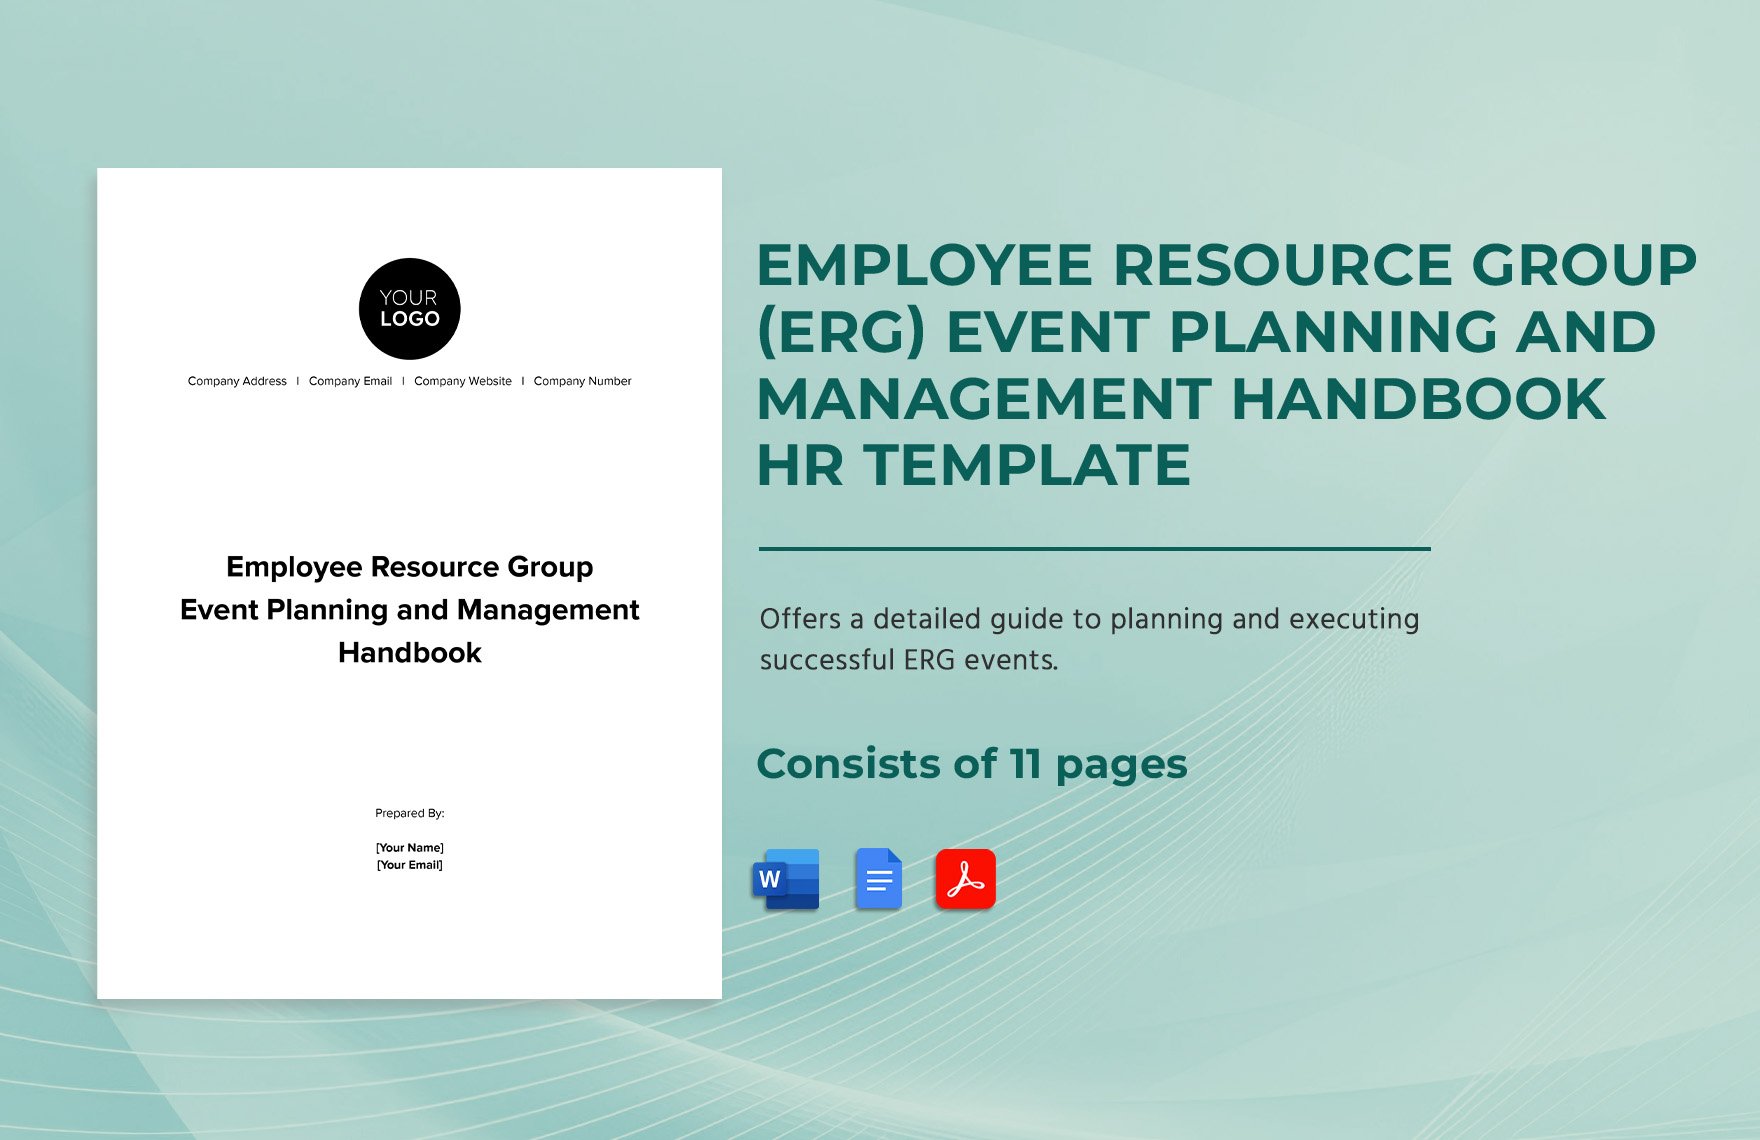 Employee Resource Group Event Planning and Management Handbook HR Template